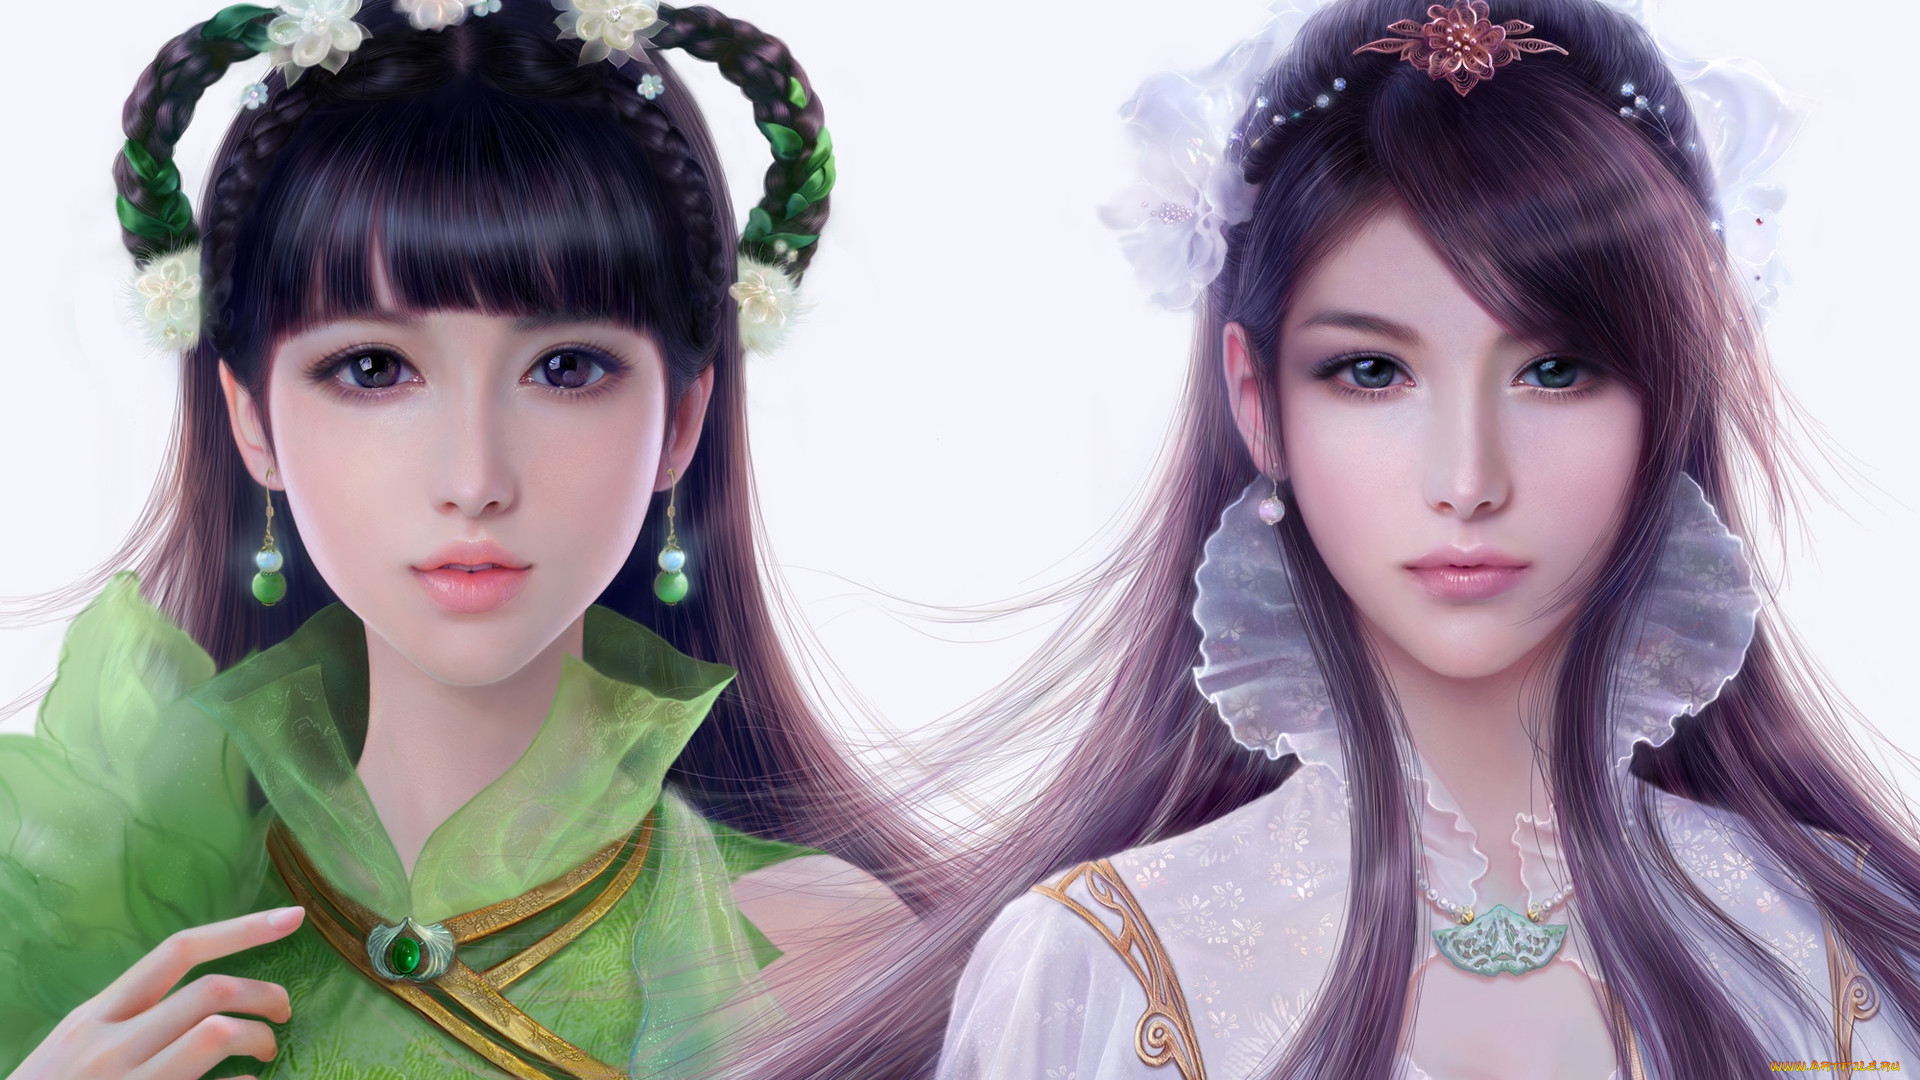 Artwork Women Two Women Asian Face Portrait Dark Hair Looking At Viewer Long Earrings White Backgrou 1920x1080